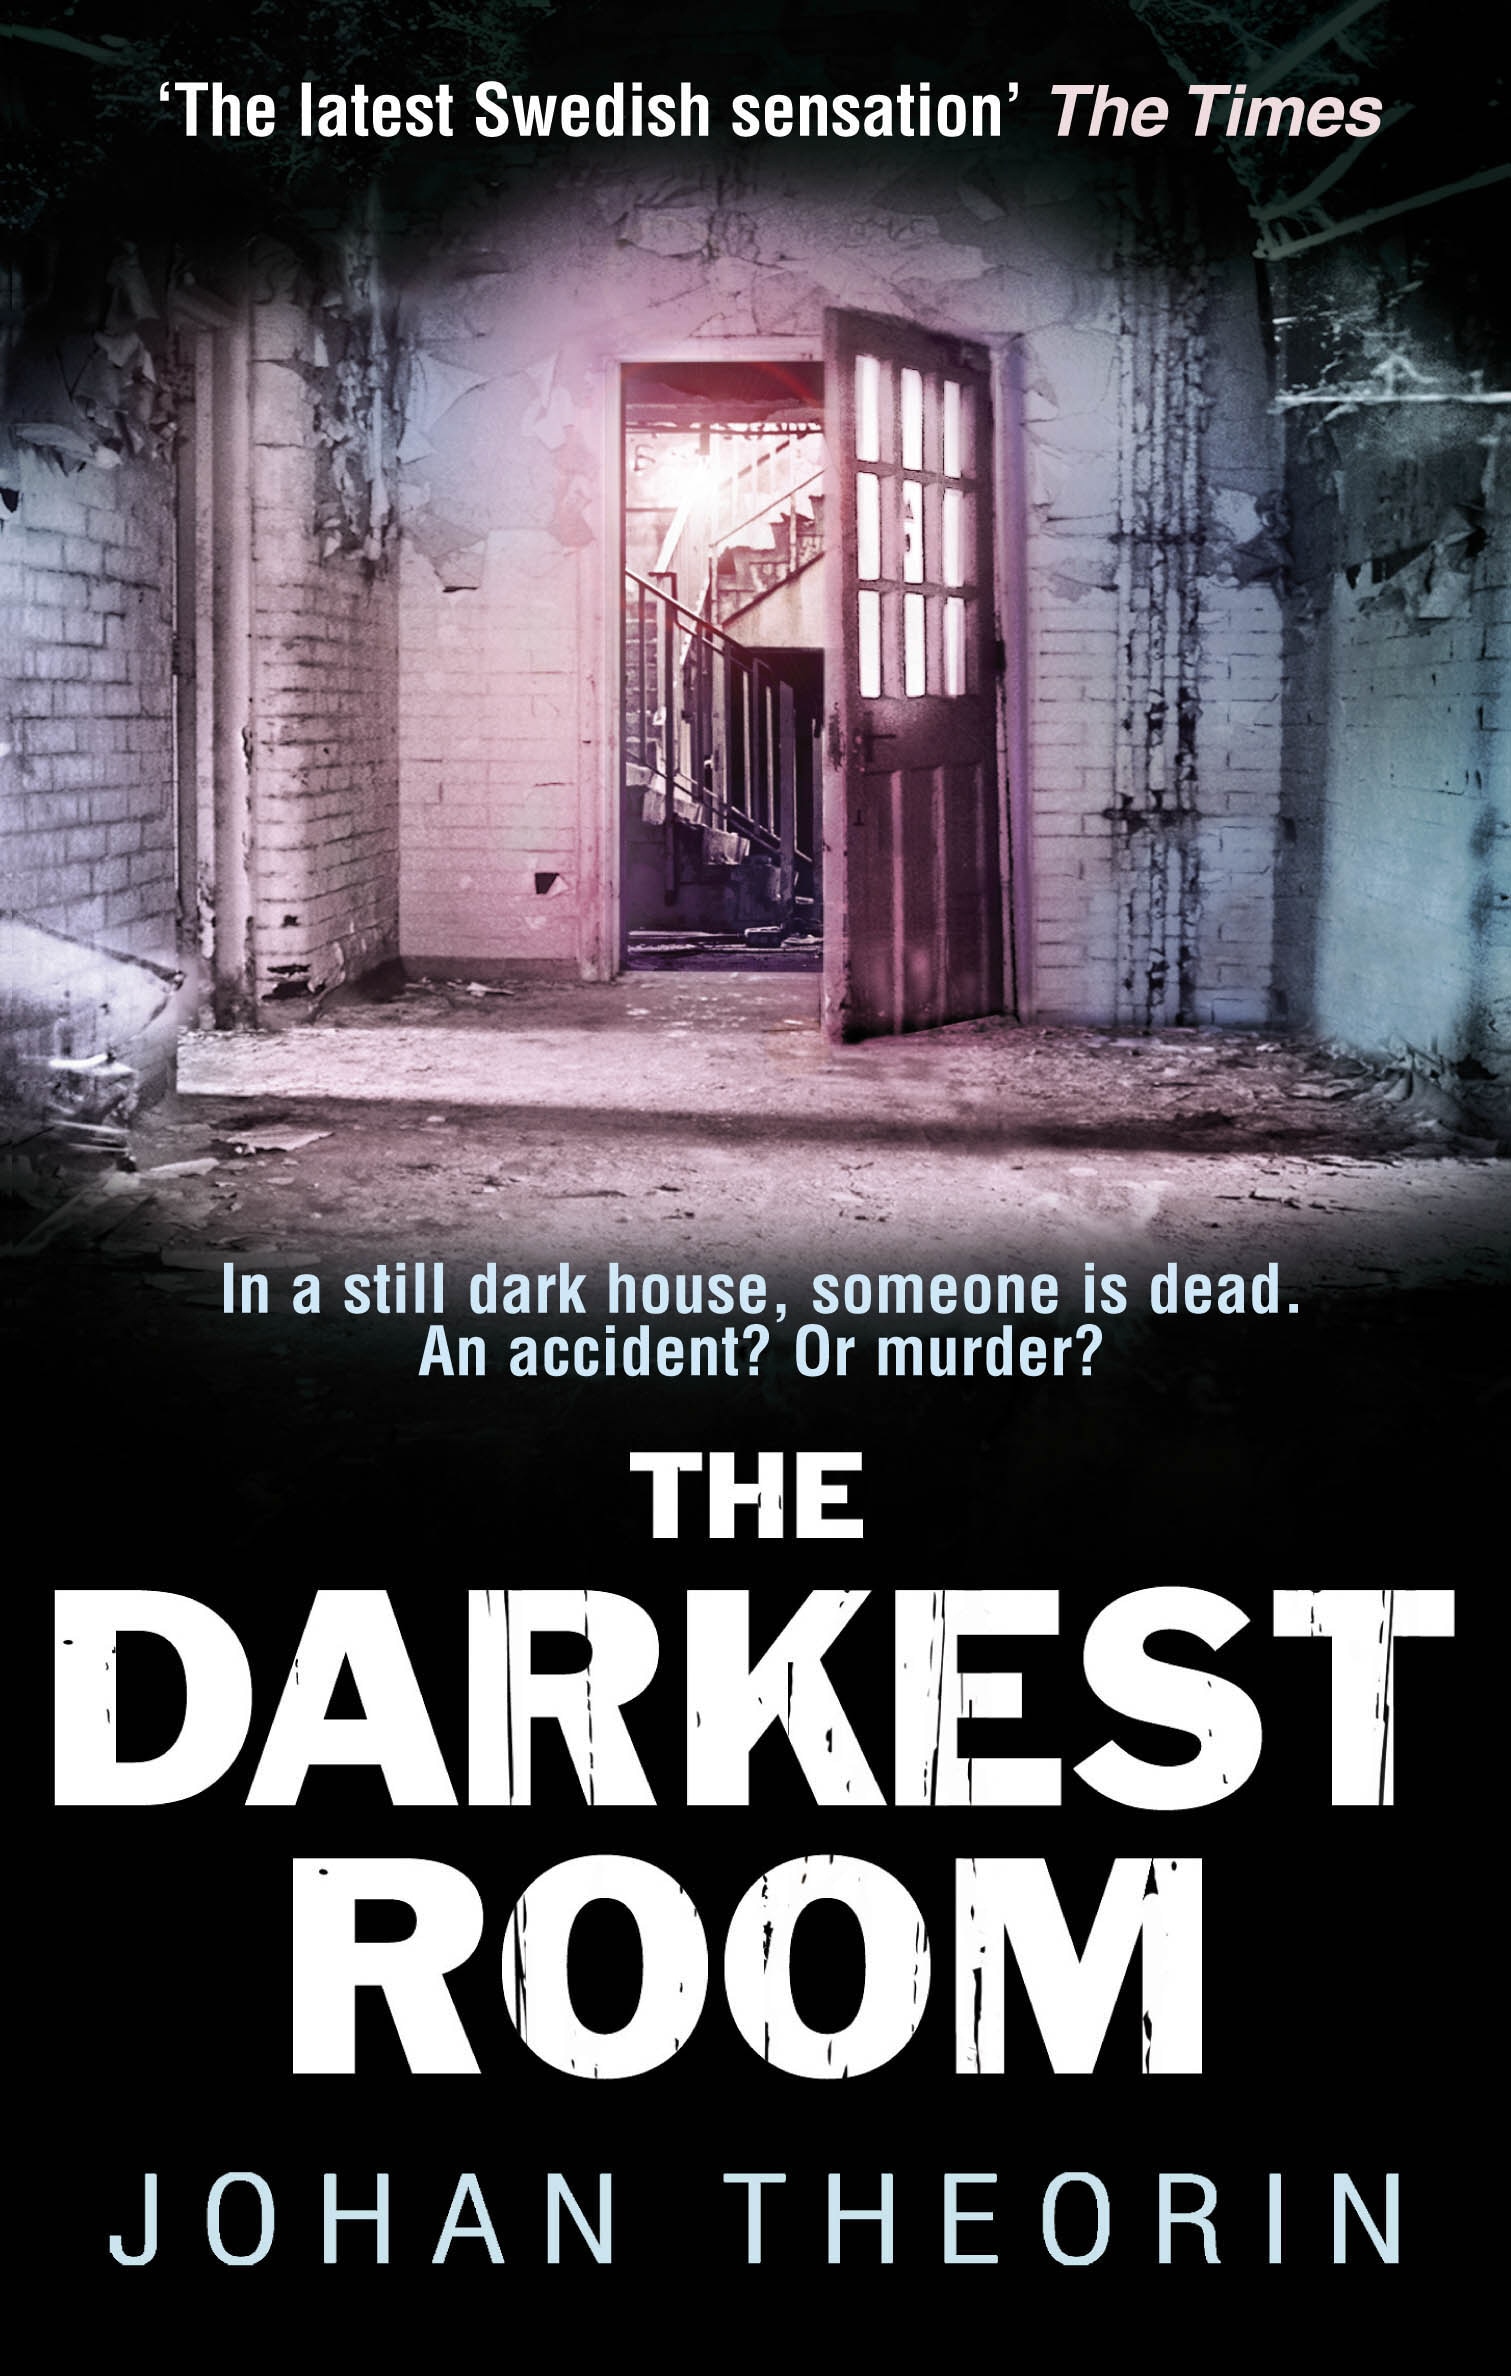 Темная комната книга. Темная комната книга купить. Theorin j. "Darkest Room". Book in Dark Room.